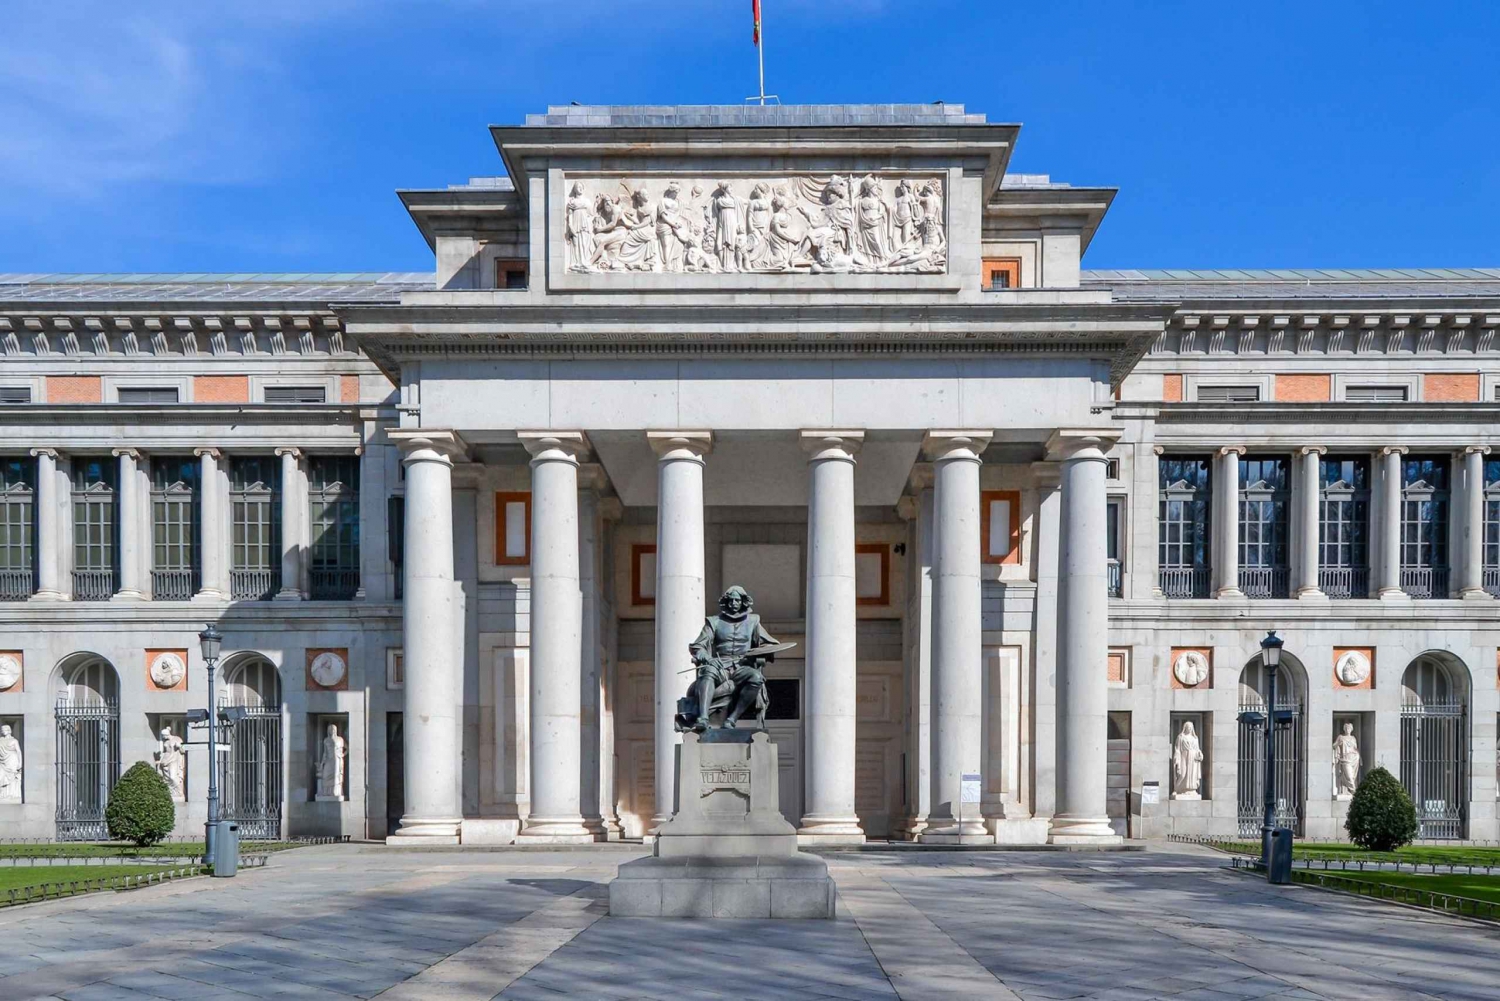 Gemme guidate: Tour del Museo del Prado